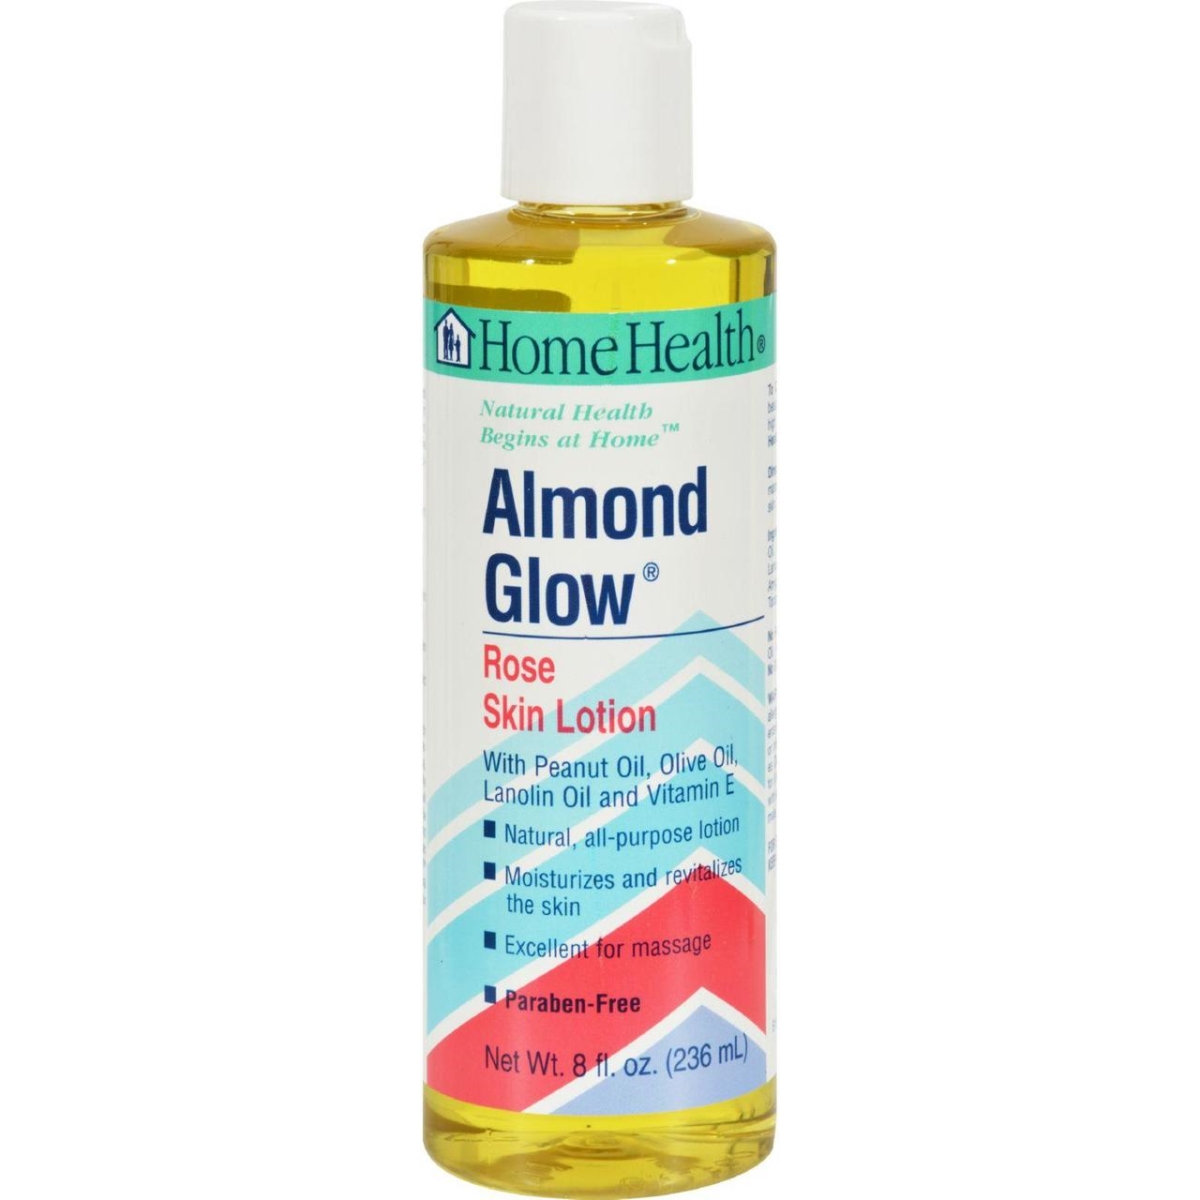 Hg0528661 8 Fl Oz Almond Glow Skin Lotion - Rose